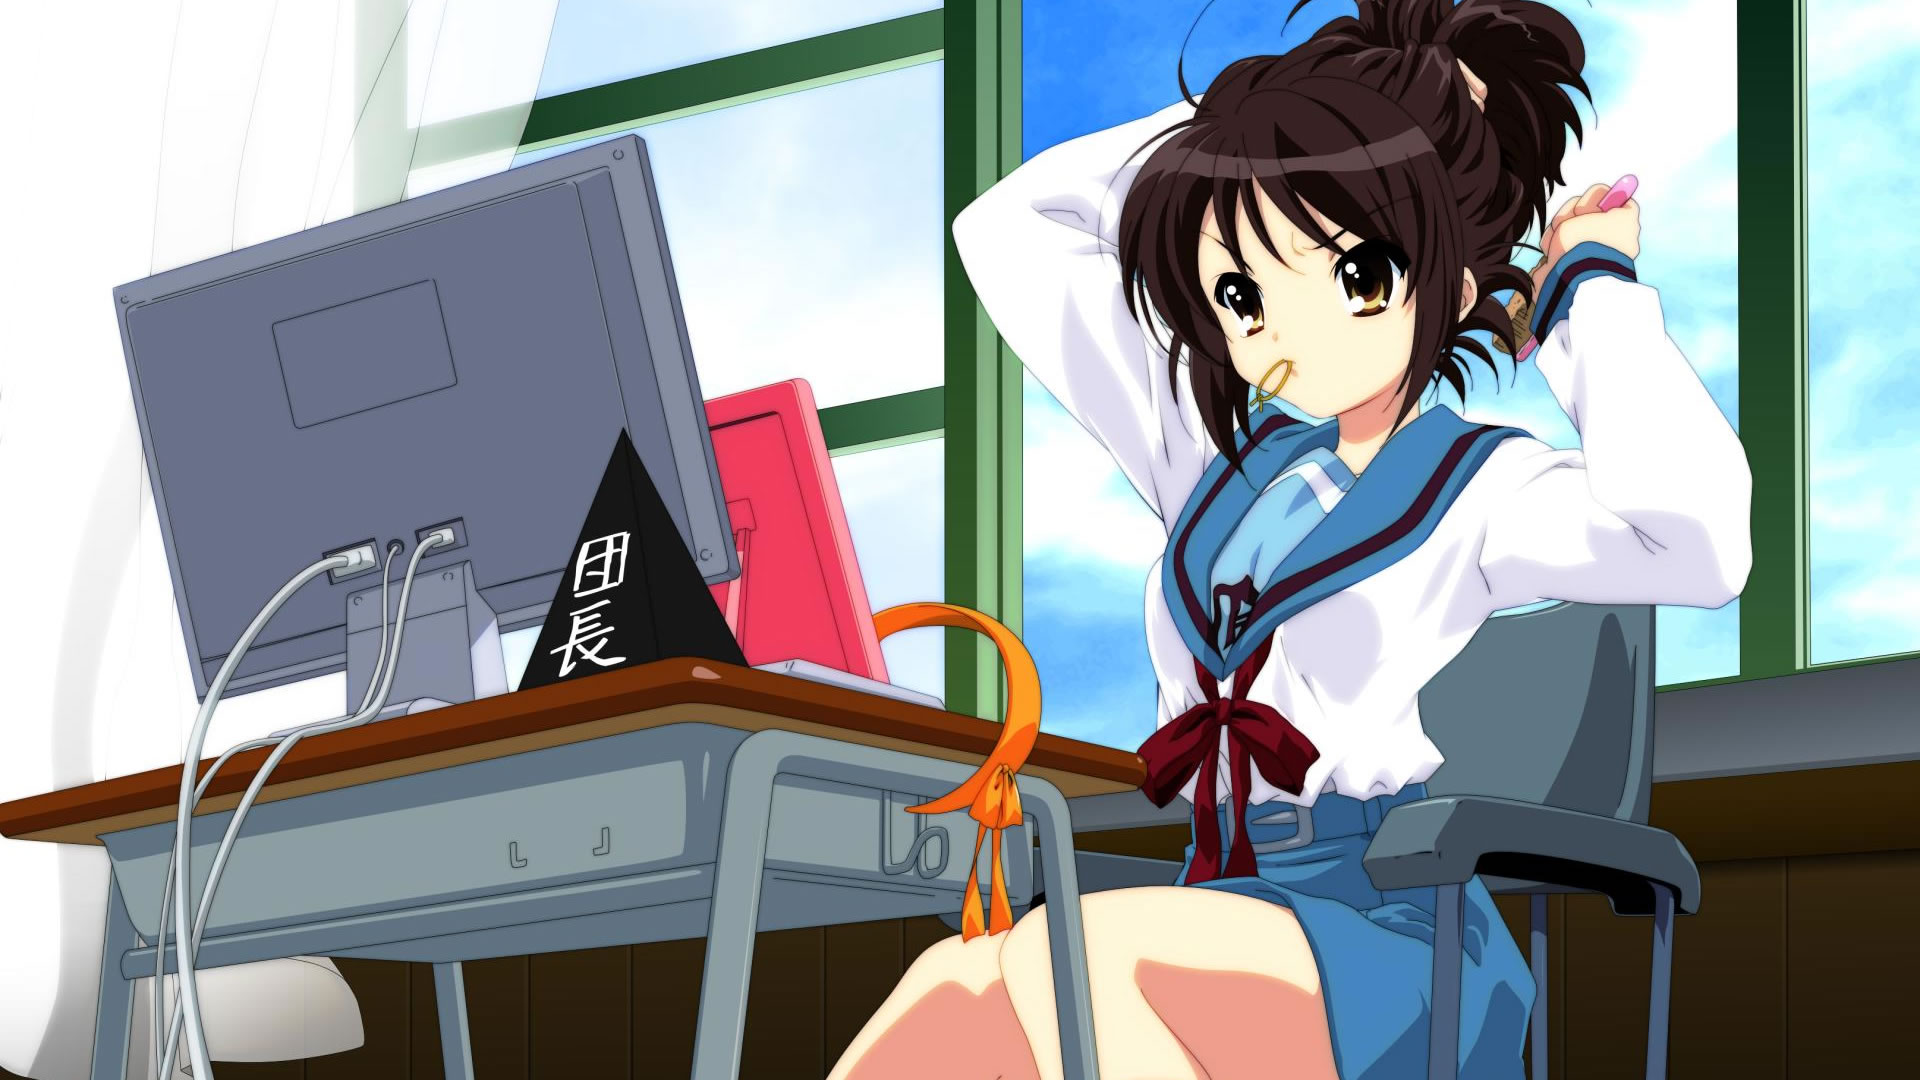 Download tema anime windows 10